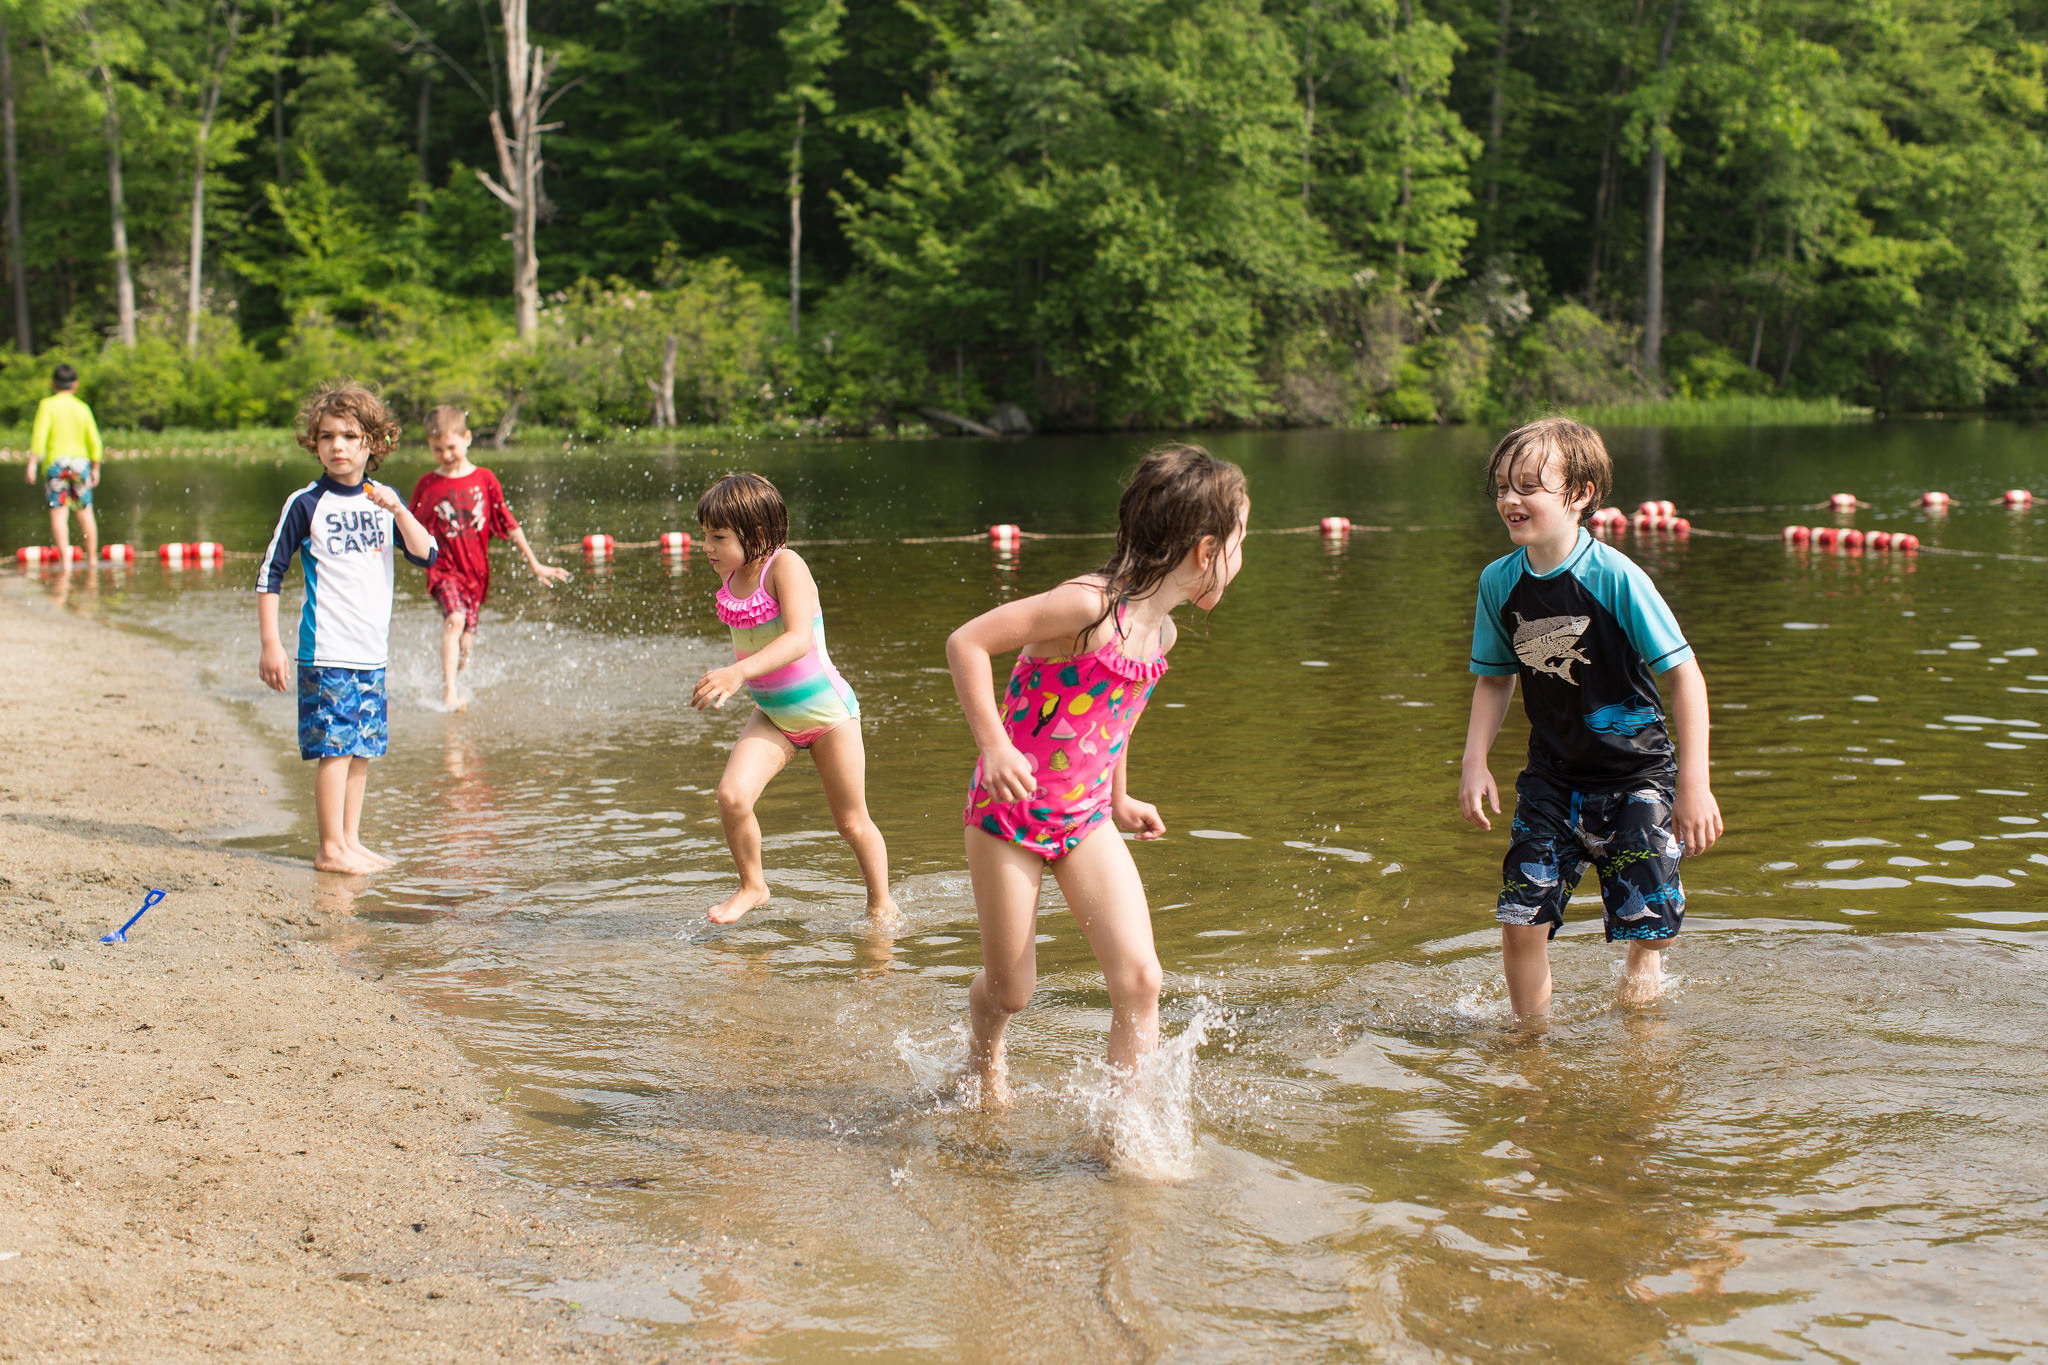 Children enjoy the water at Redding's Topstone Park.